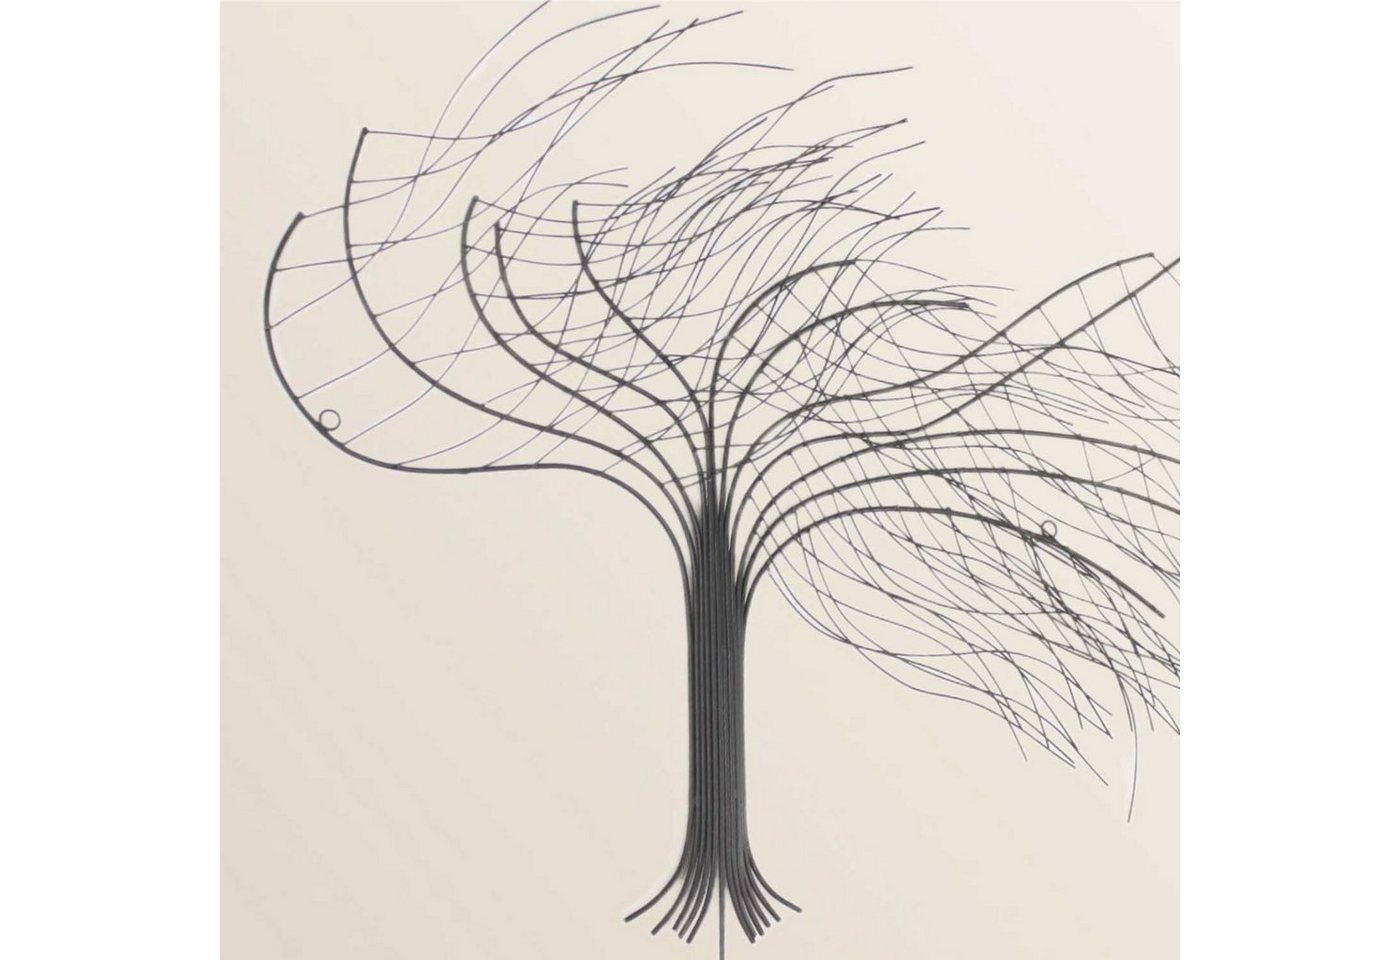 Casa Moro Wanddekoobjekt Metall Wanddeko Baum im Wind 75 x 57 cm (B/H) schwarz (Silhouette Boho Chic Wand-Kunst, Wandschmuck Metall-Skulptur 3D Wand-Bild), Kunsthandwerk Geschenk Idee von Casa Moro